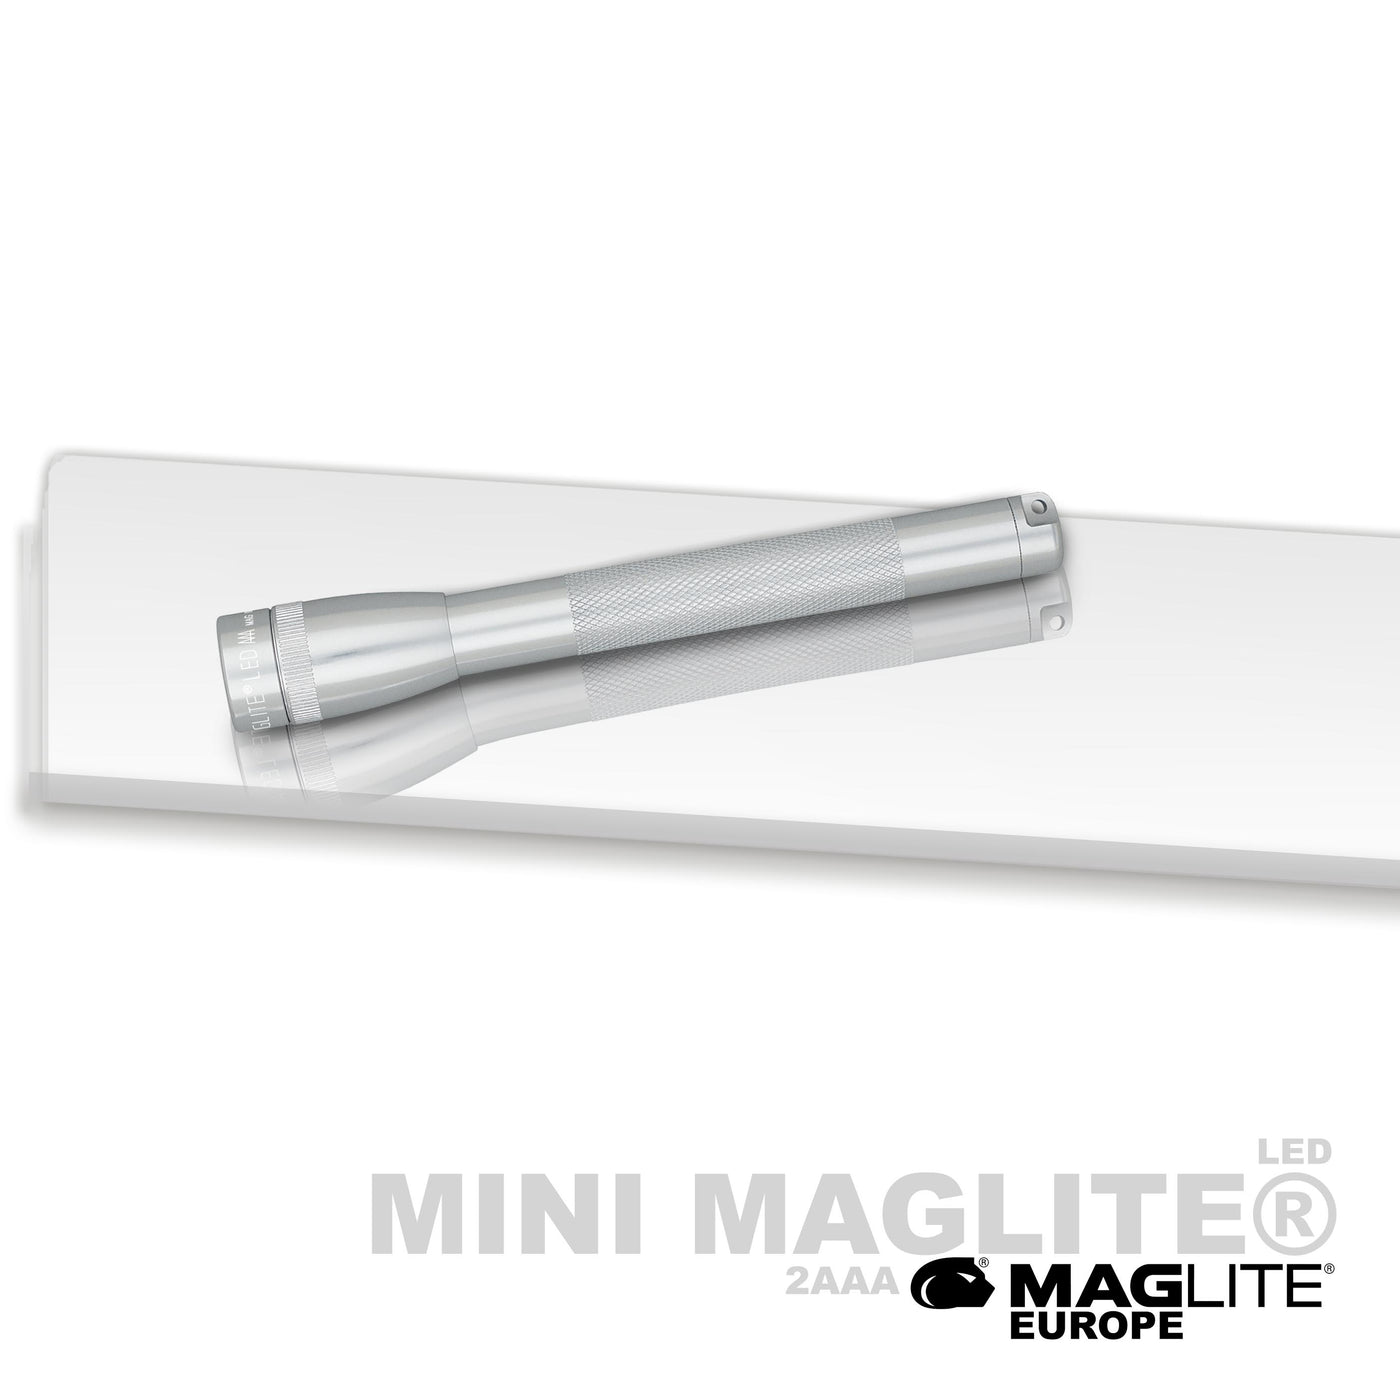 Mini Maglite® AAA LED